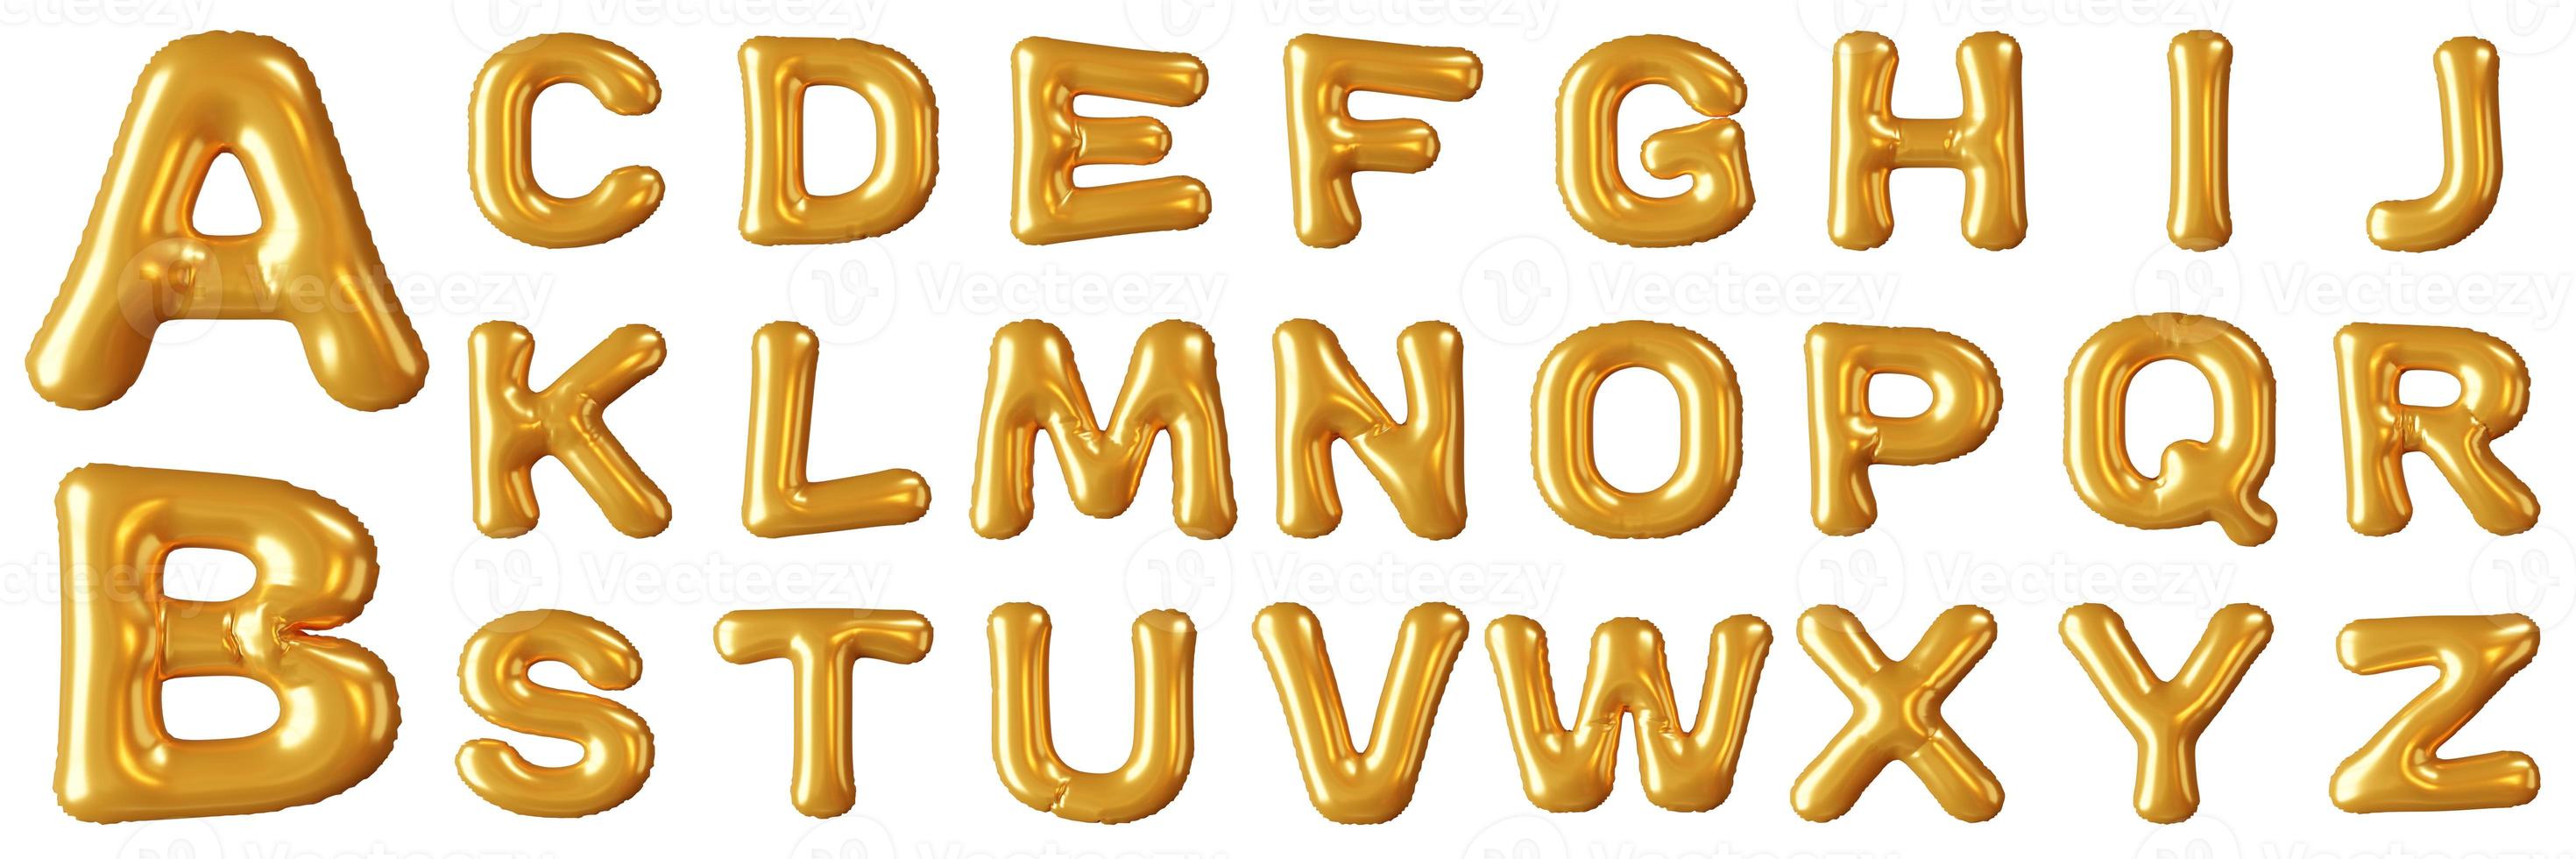 engelsk alfabet från guld ballonger isolerat på vit bakgrund foto